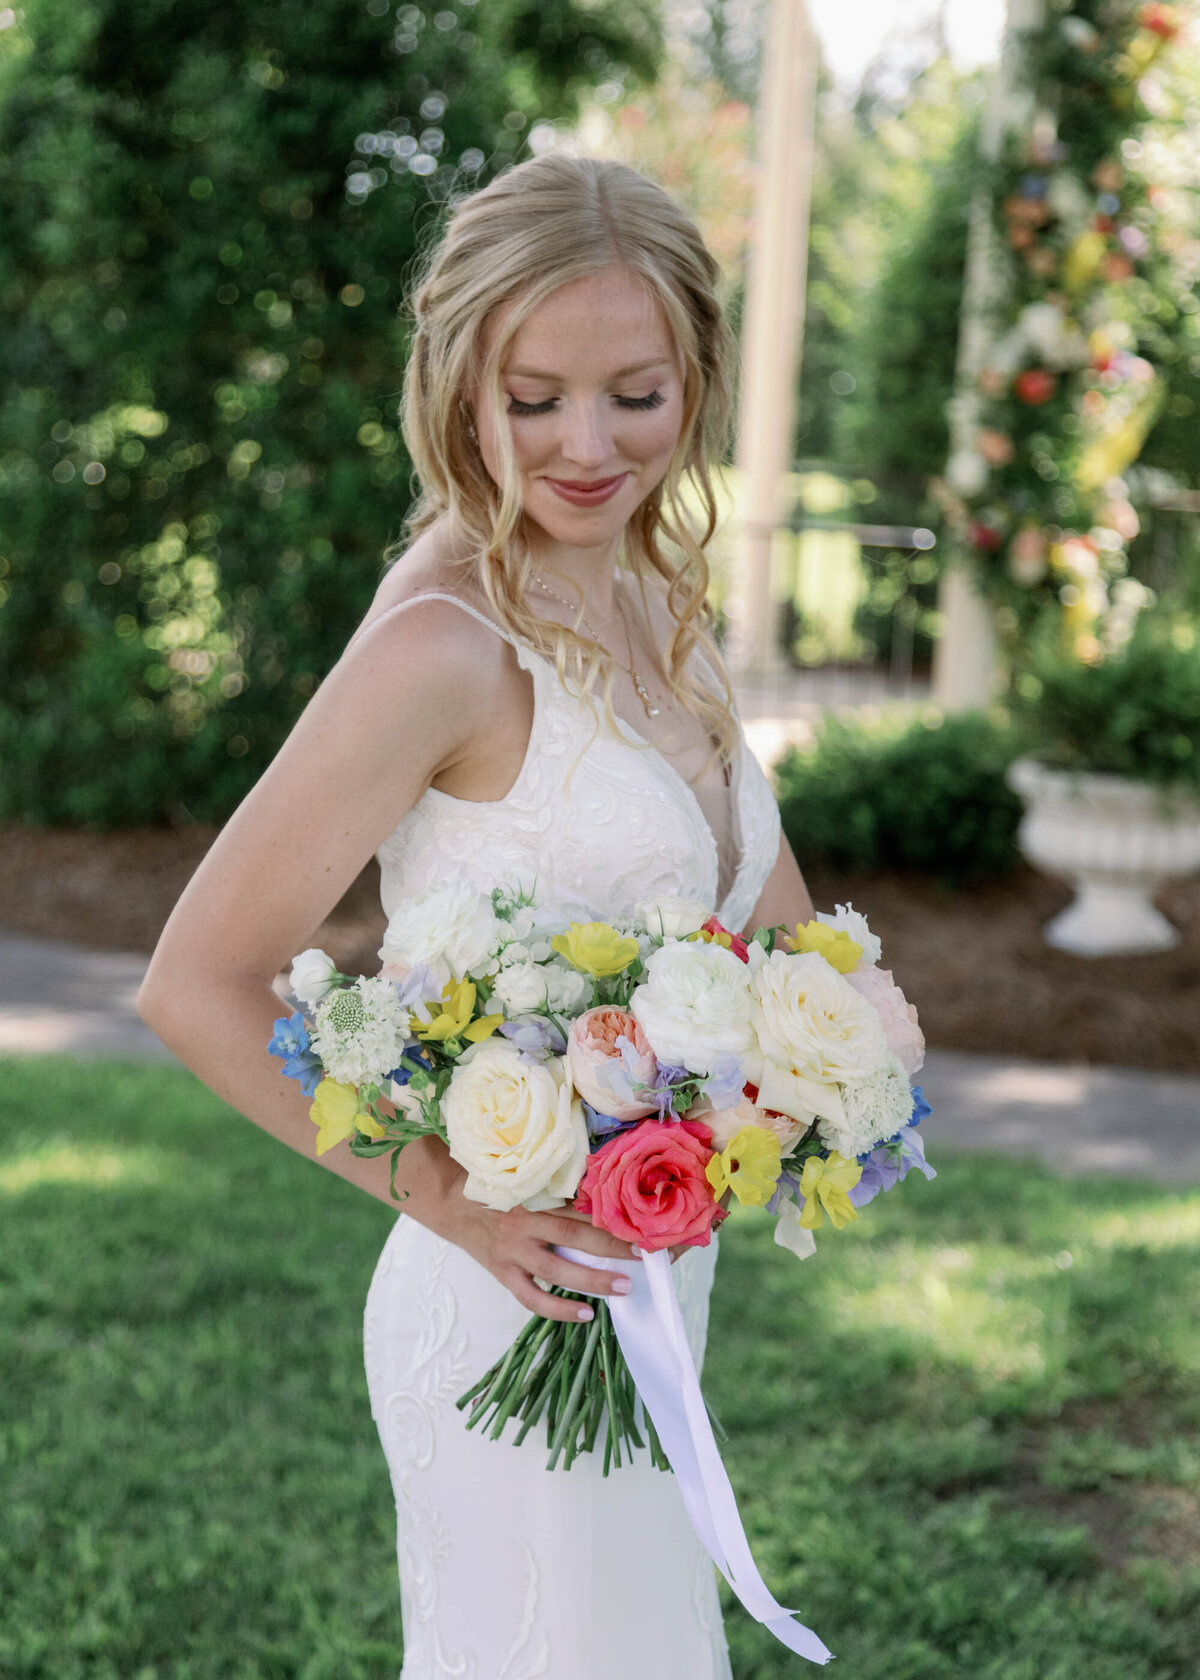 Allie Nichols Photography | Greenville, NC wedding photographer